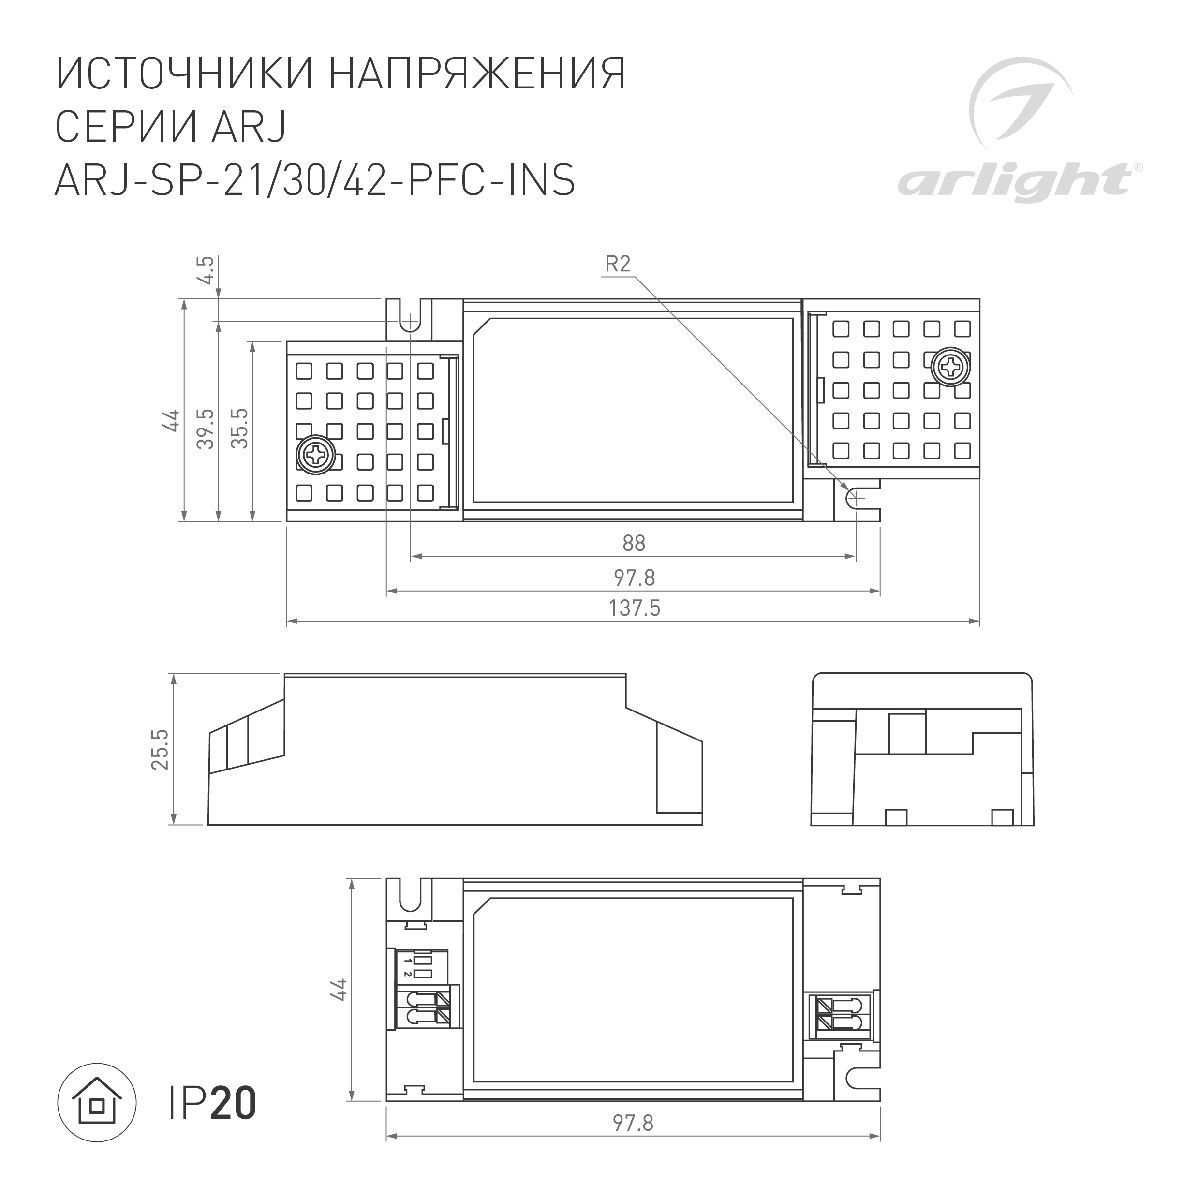 Блок питания Arlight ARJ-SP-42-PFC-INS (42W, 25-40V, 0.7-1.05A) 023072(1)